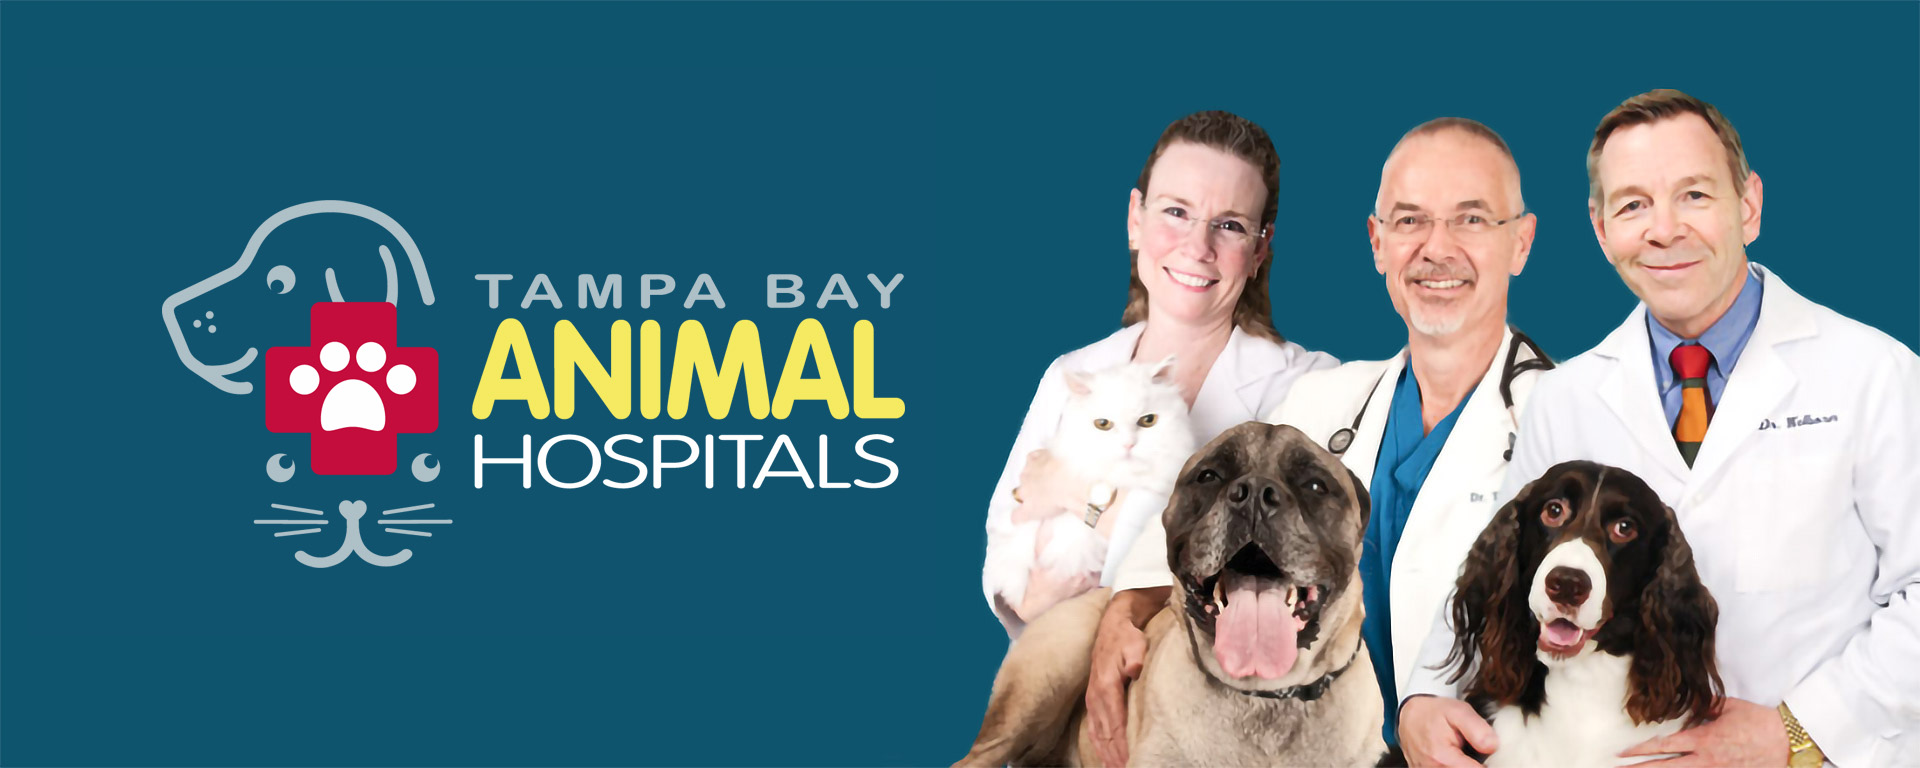 6 Pet Hospital Locations: Tampa Bay Animal Hospital Group - Tampa, FL